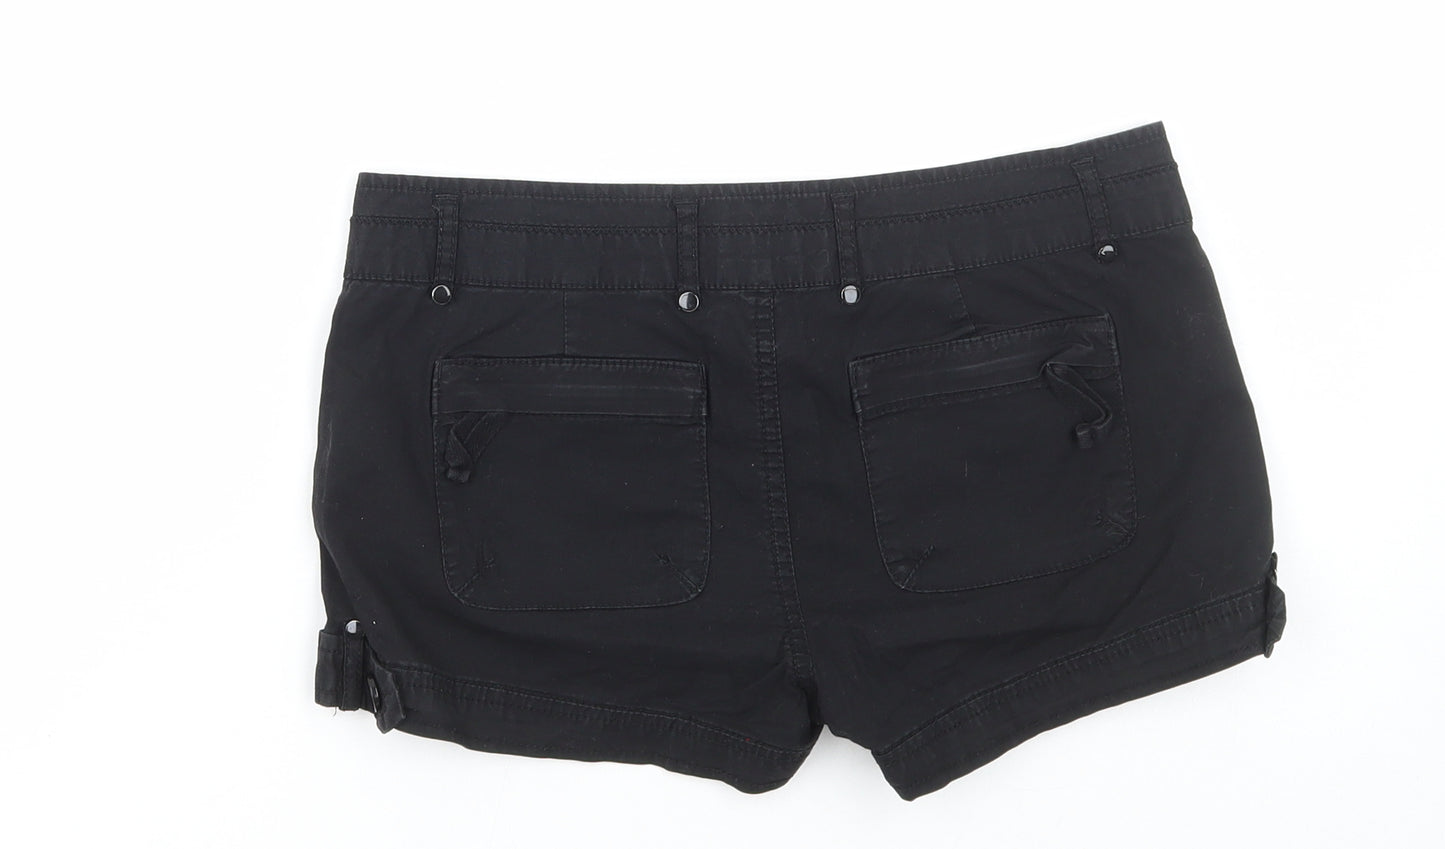 CI SONO Womens Black Cotton Hot Pants Shorts Size M Regular Zip